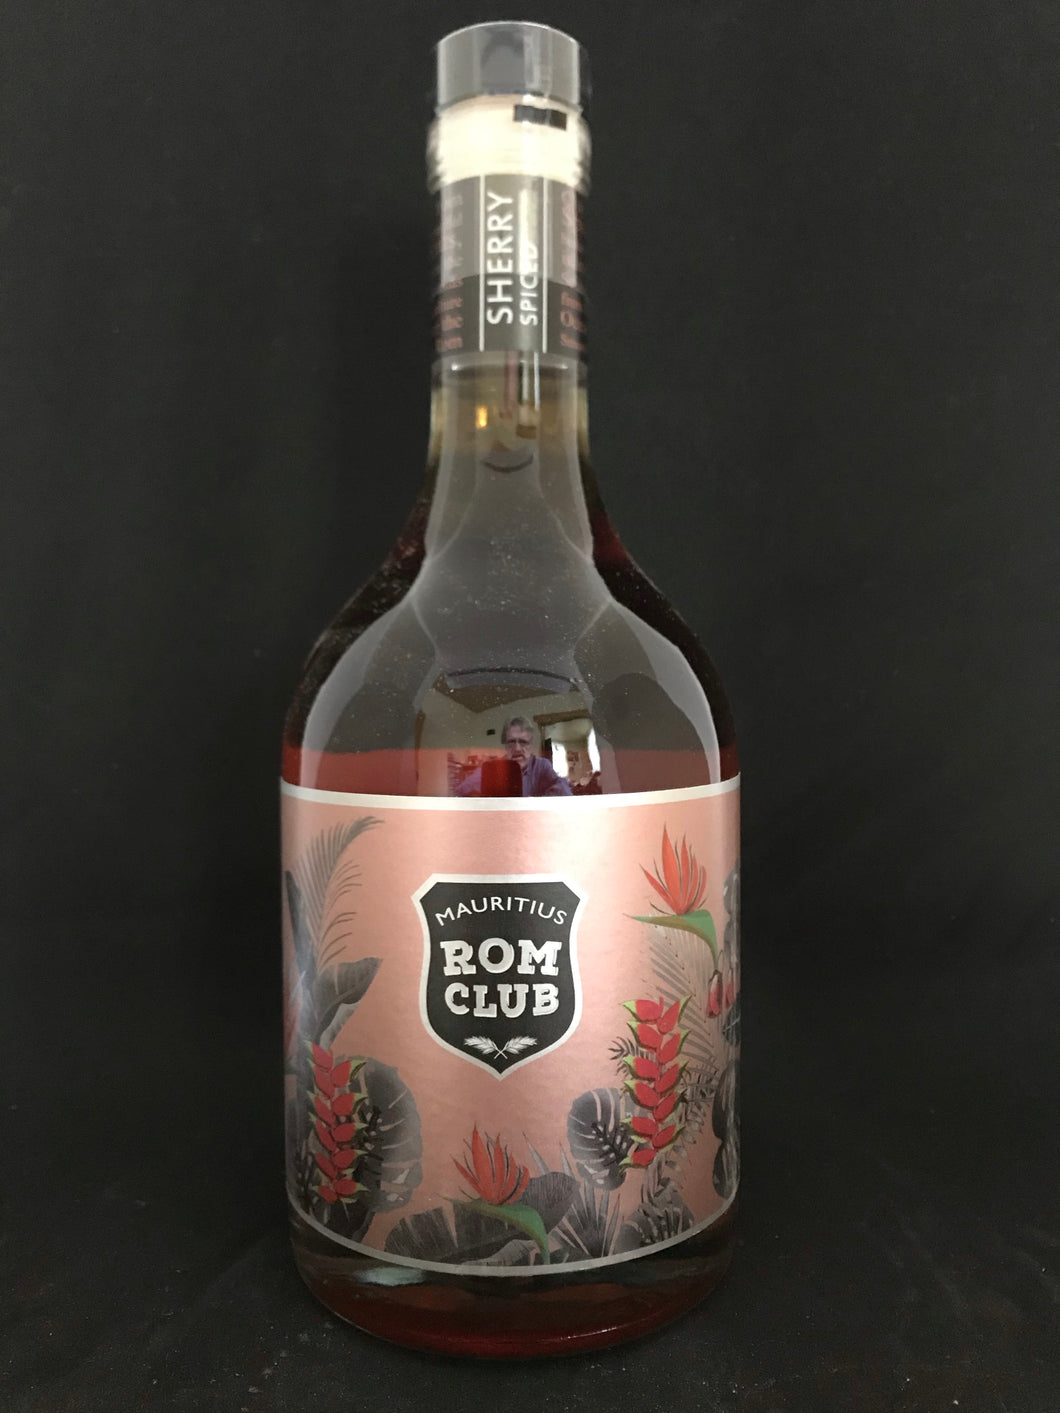 Rom Club - Mauritius Sherry Spiced 40%Vol., Mauritius; 0,7l